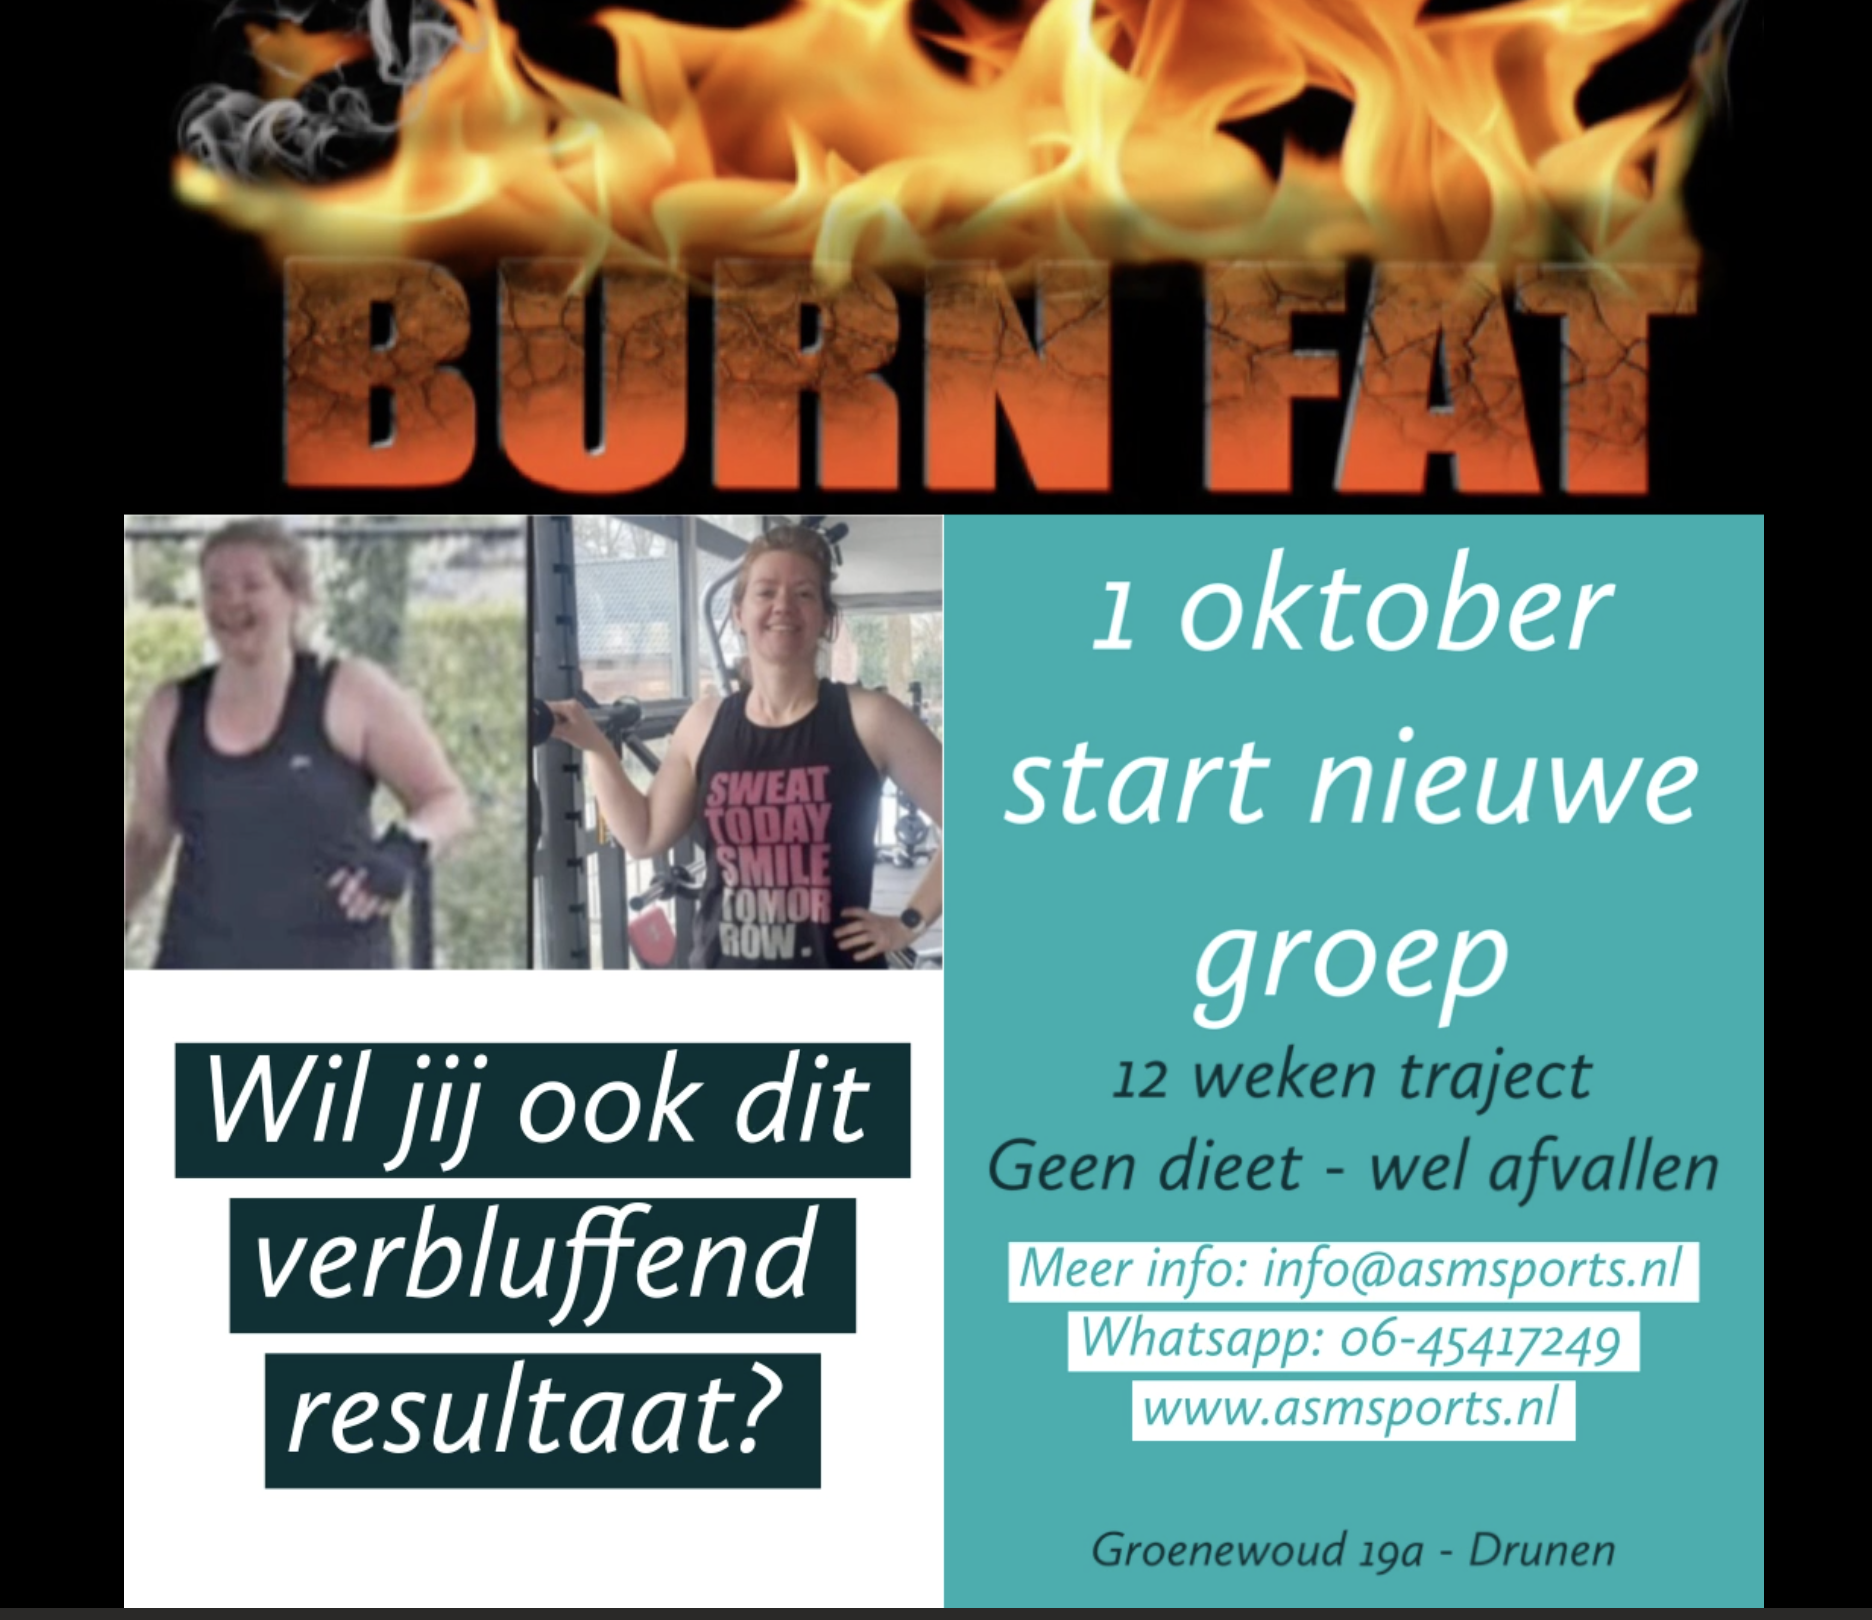 Burn fat start 1 oktober